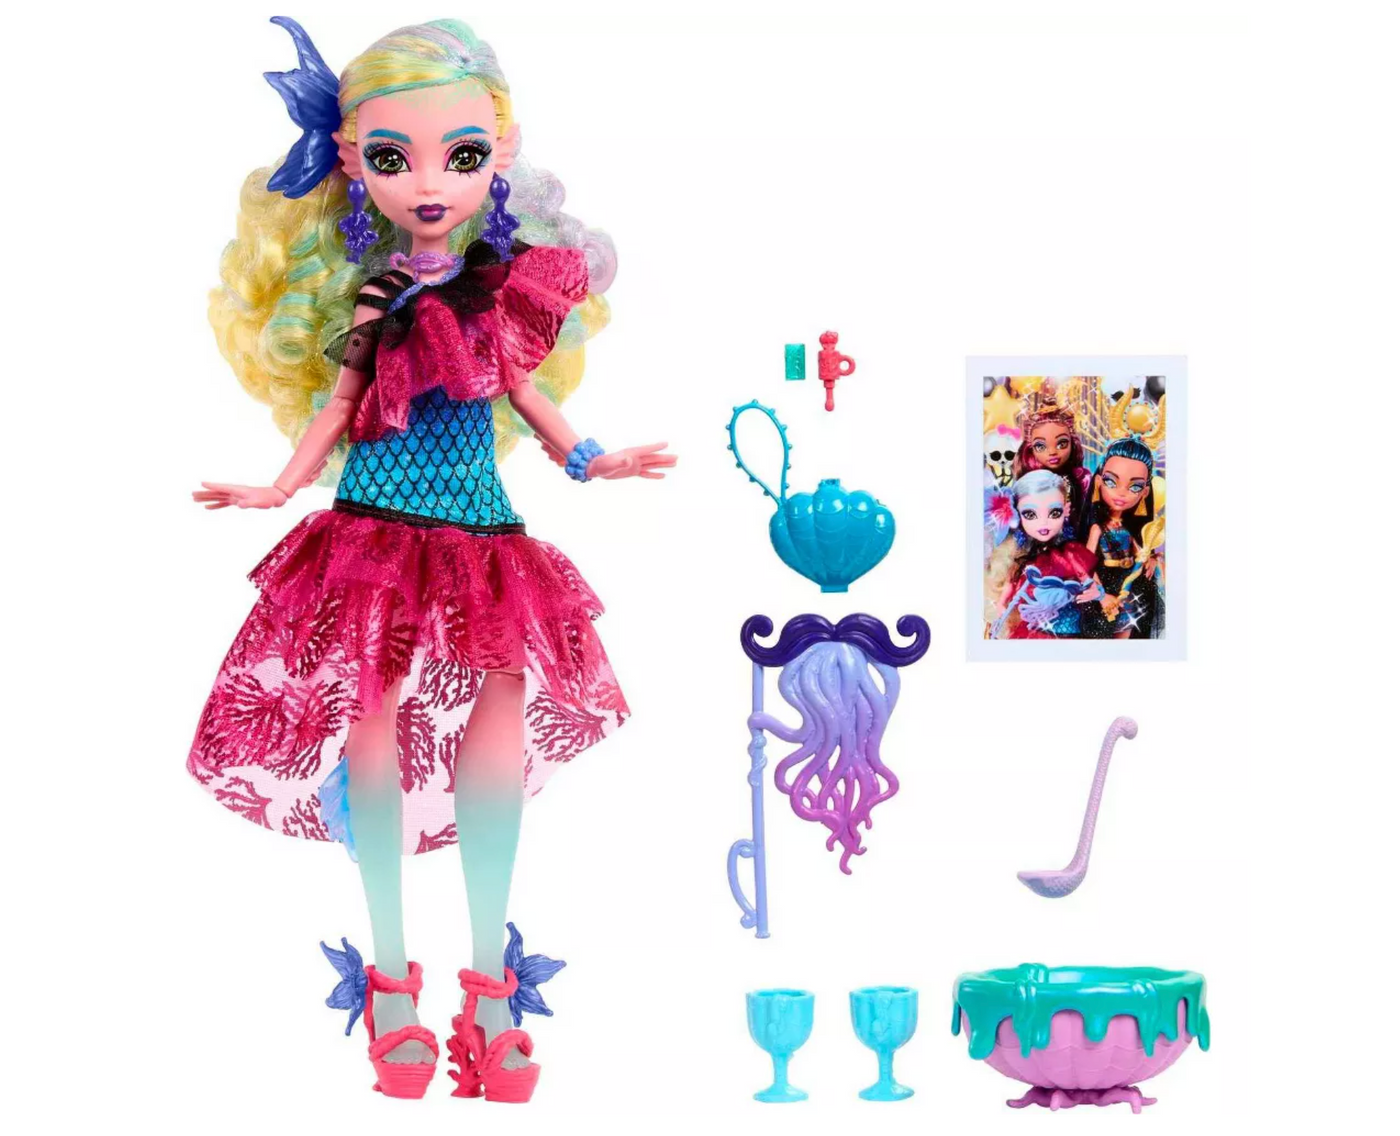 Mattel Monster High Monster Ball Lagoona Blue Fashion Doll New with Box